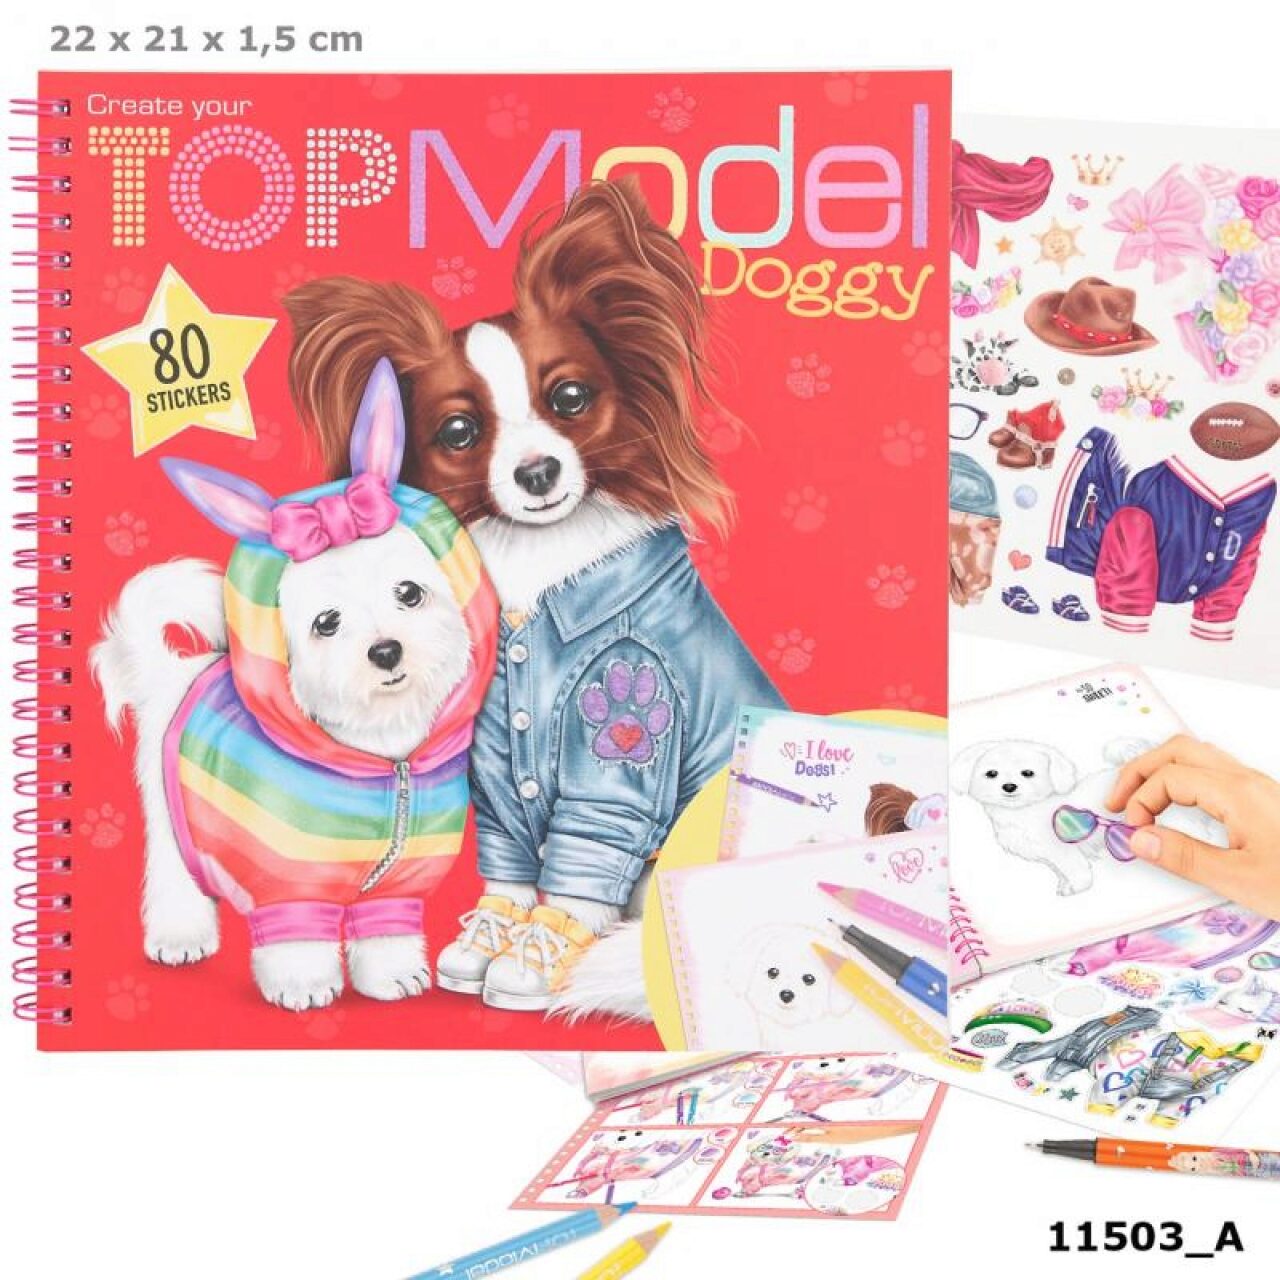 Depesche 11503 Create your TOPModel Doggy Malbuch Kreativbuch Hunde mit Stickern 